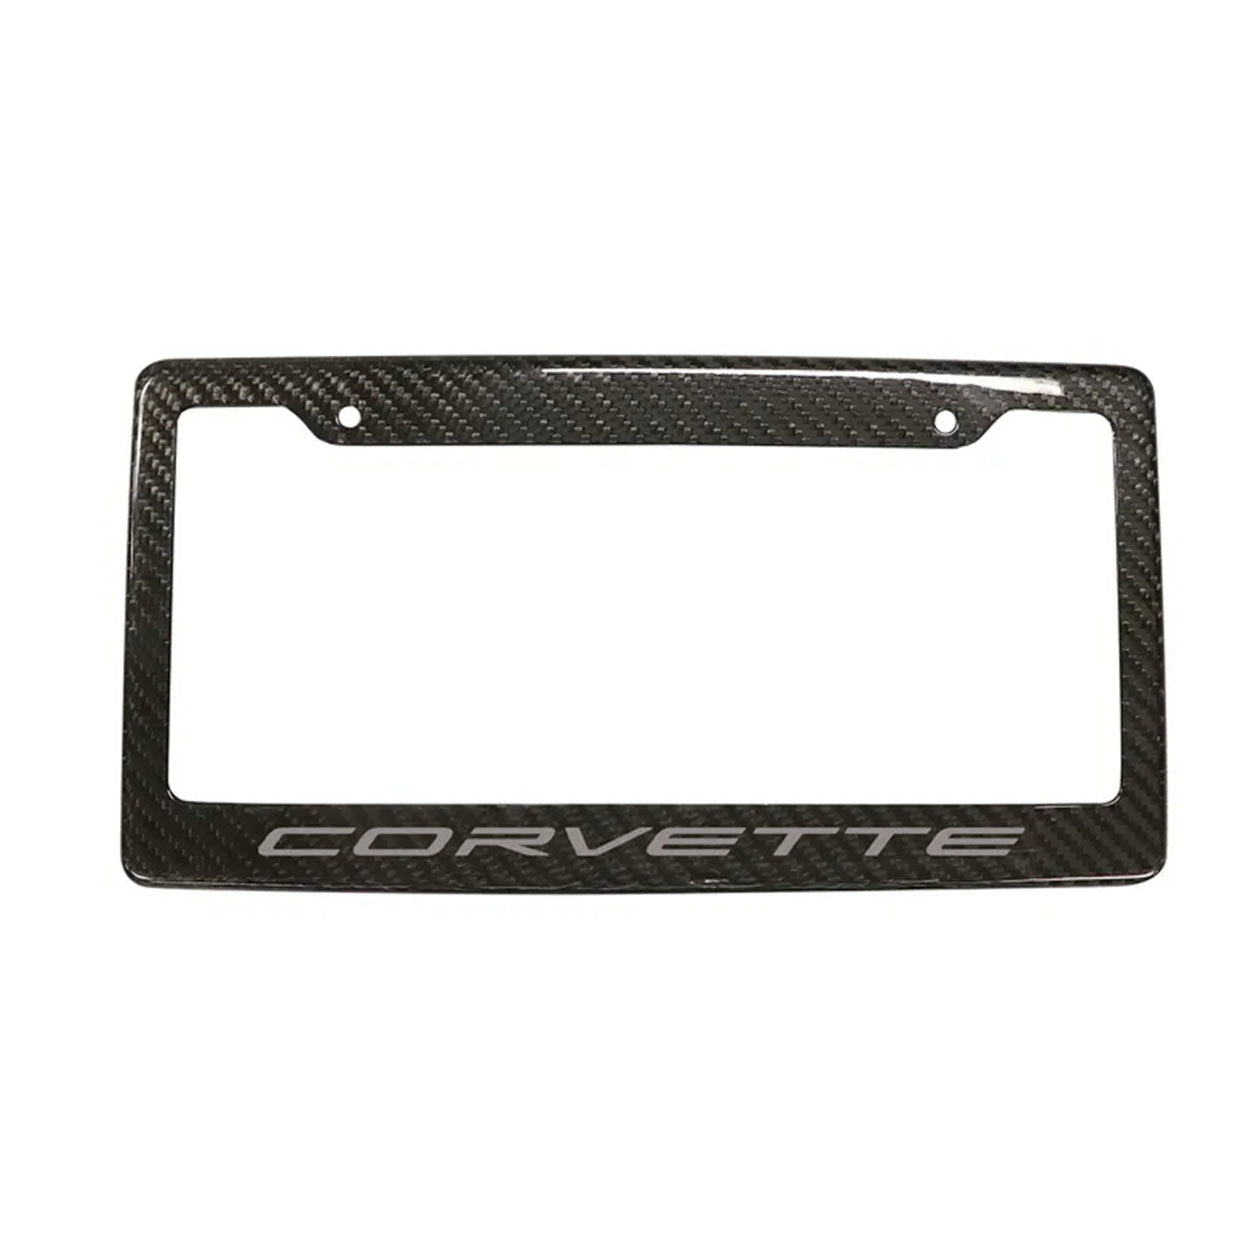 C8 Corvette License Plate Frame - Carbon Fiber